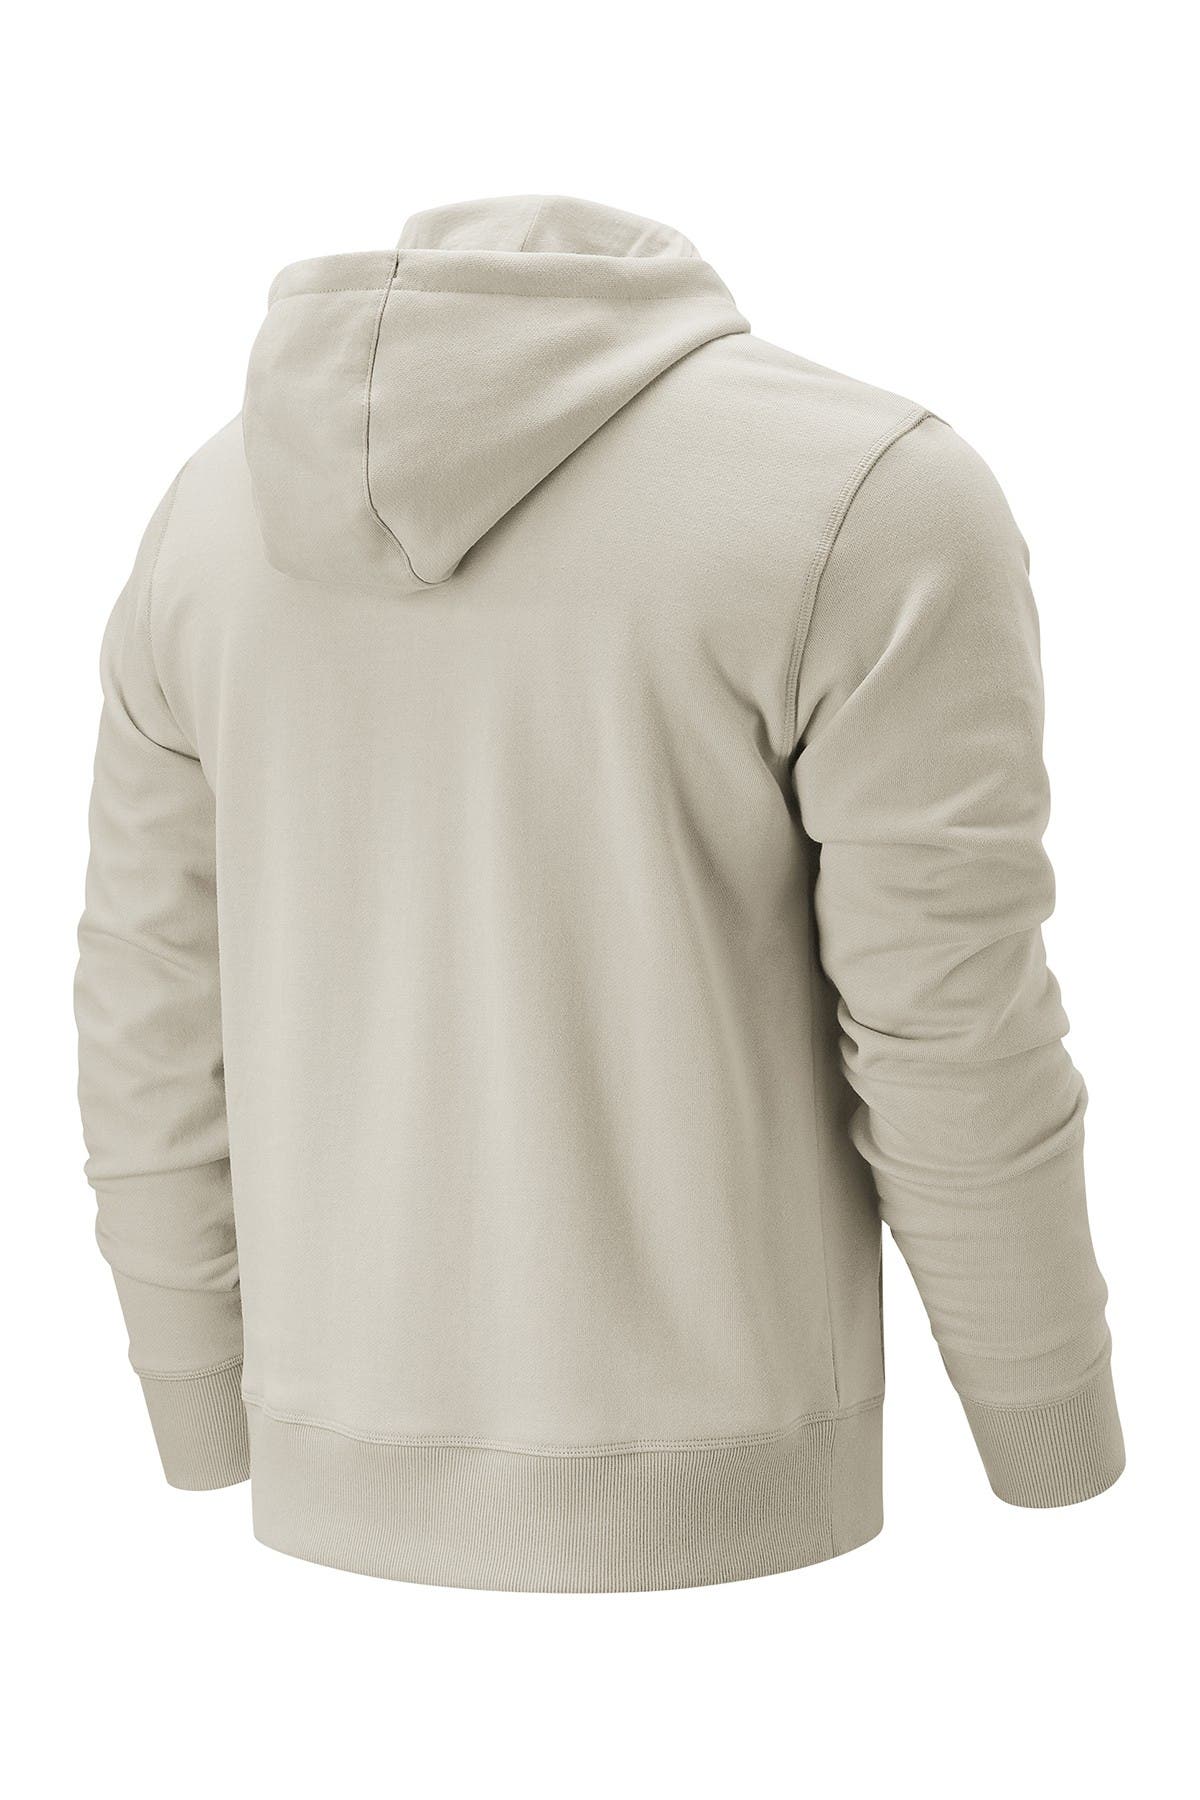 the intelligent choice new balance hoodie